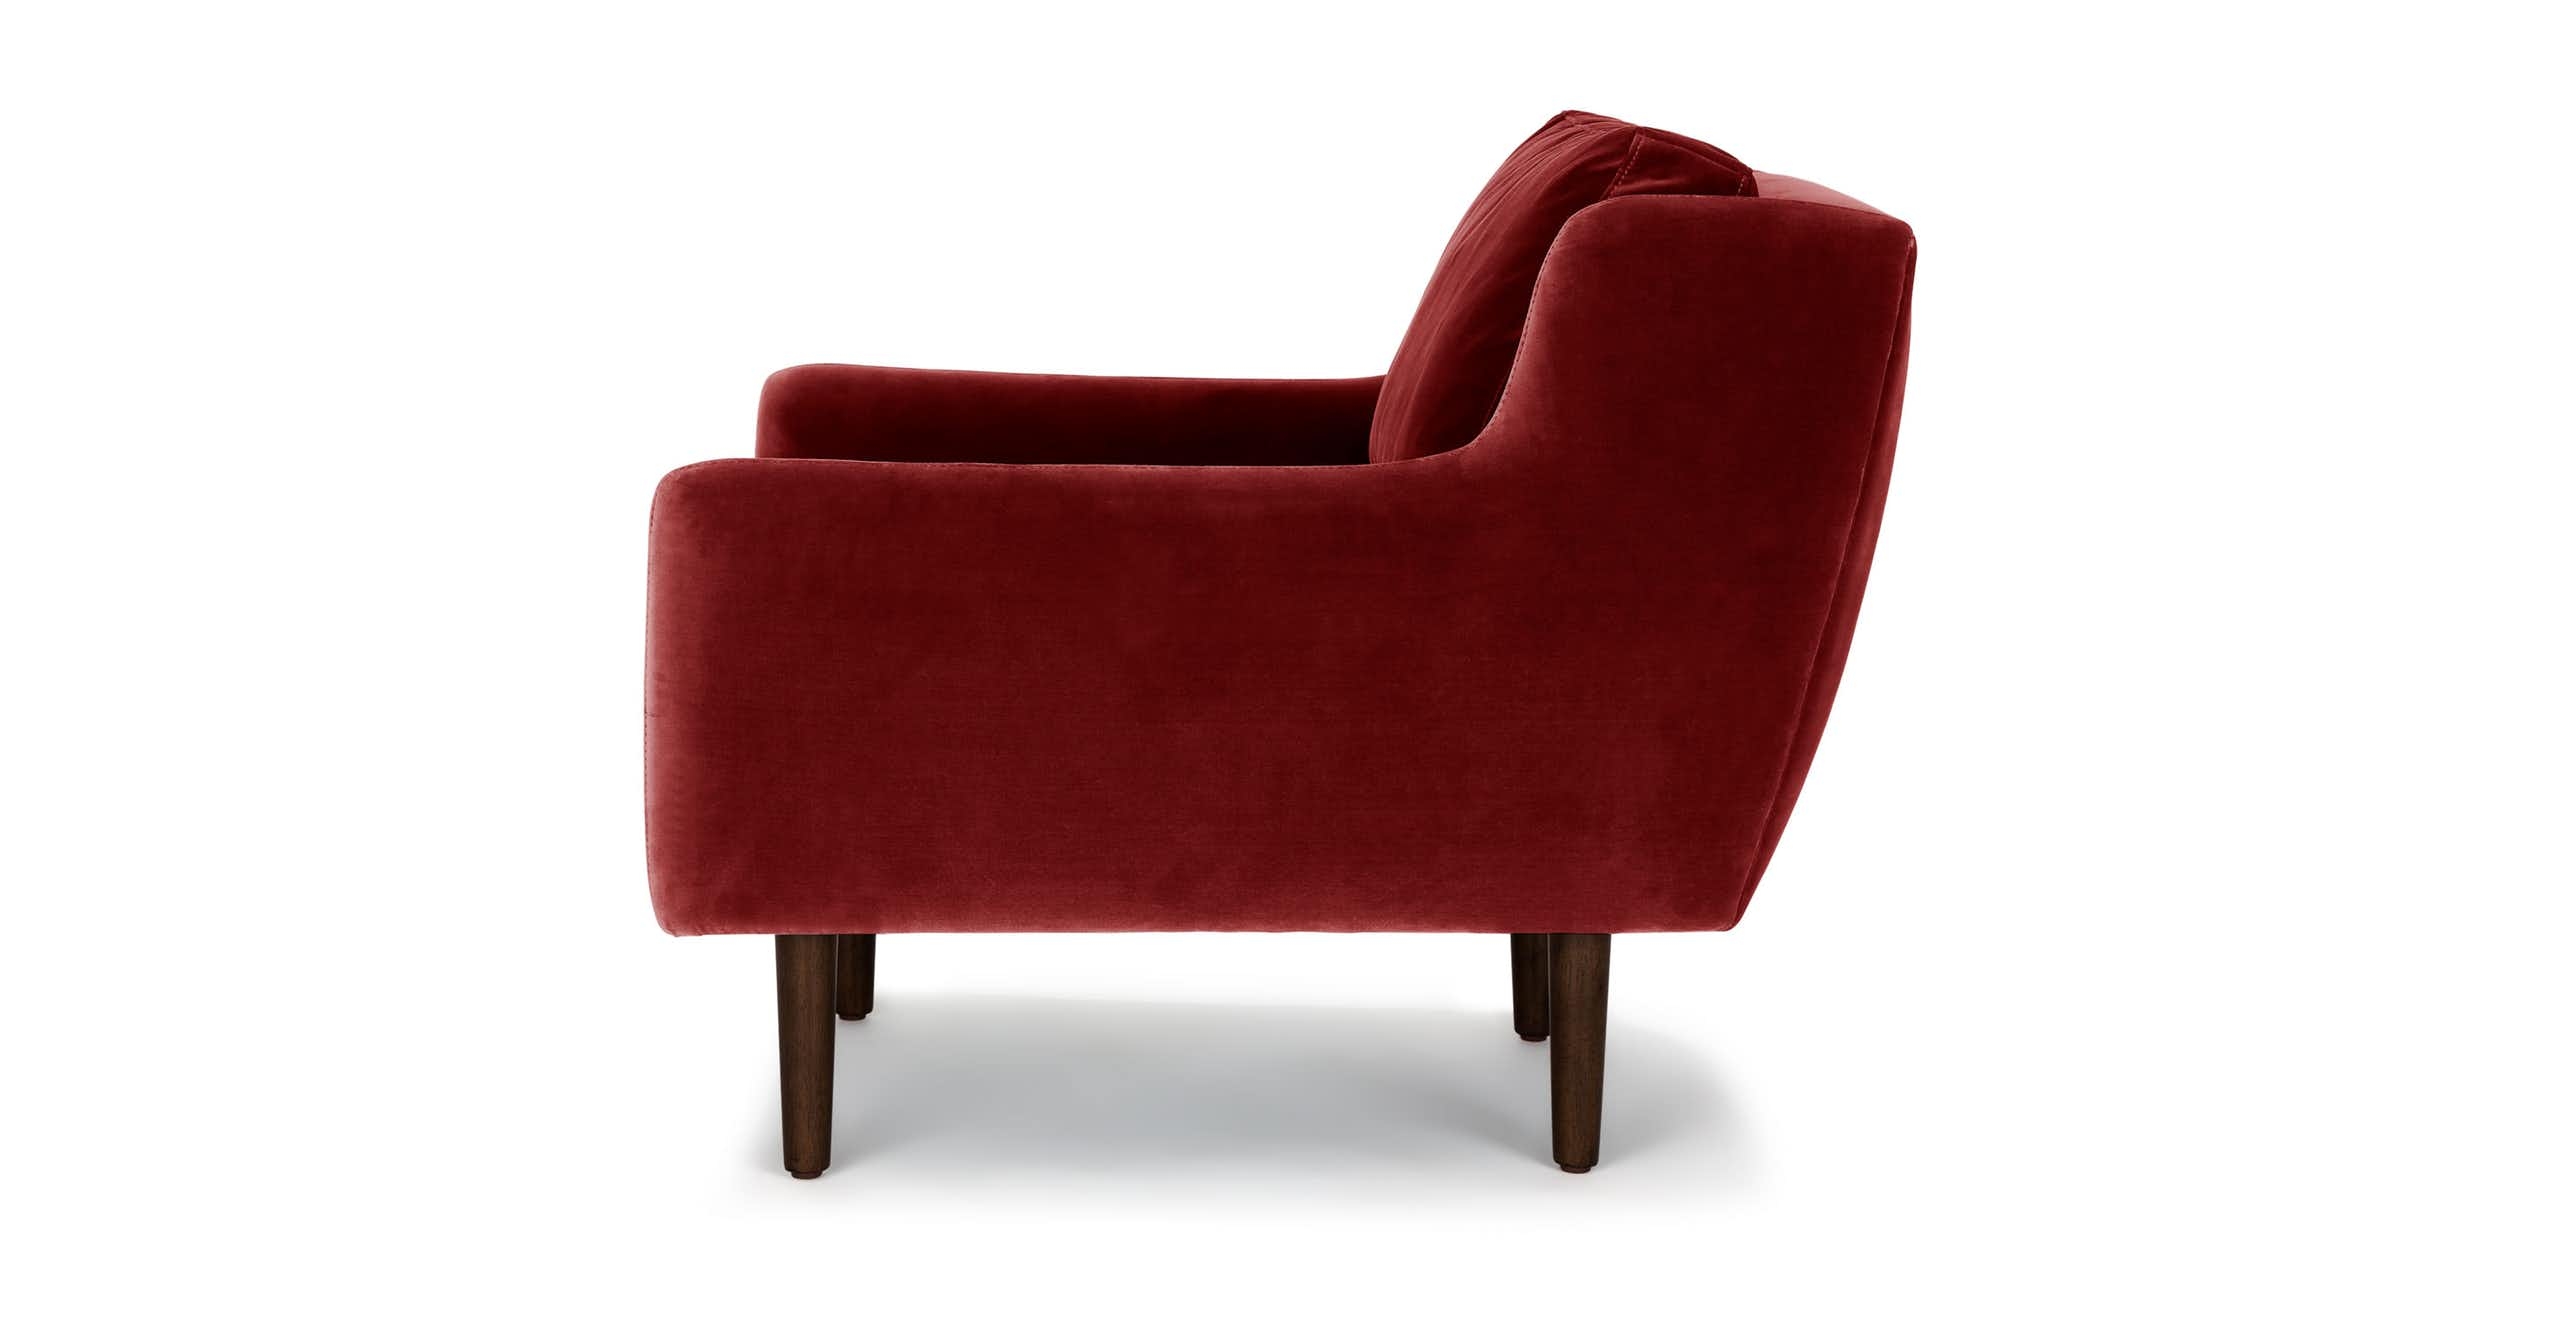 Matrix Claret Red Chair - Image 2